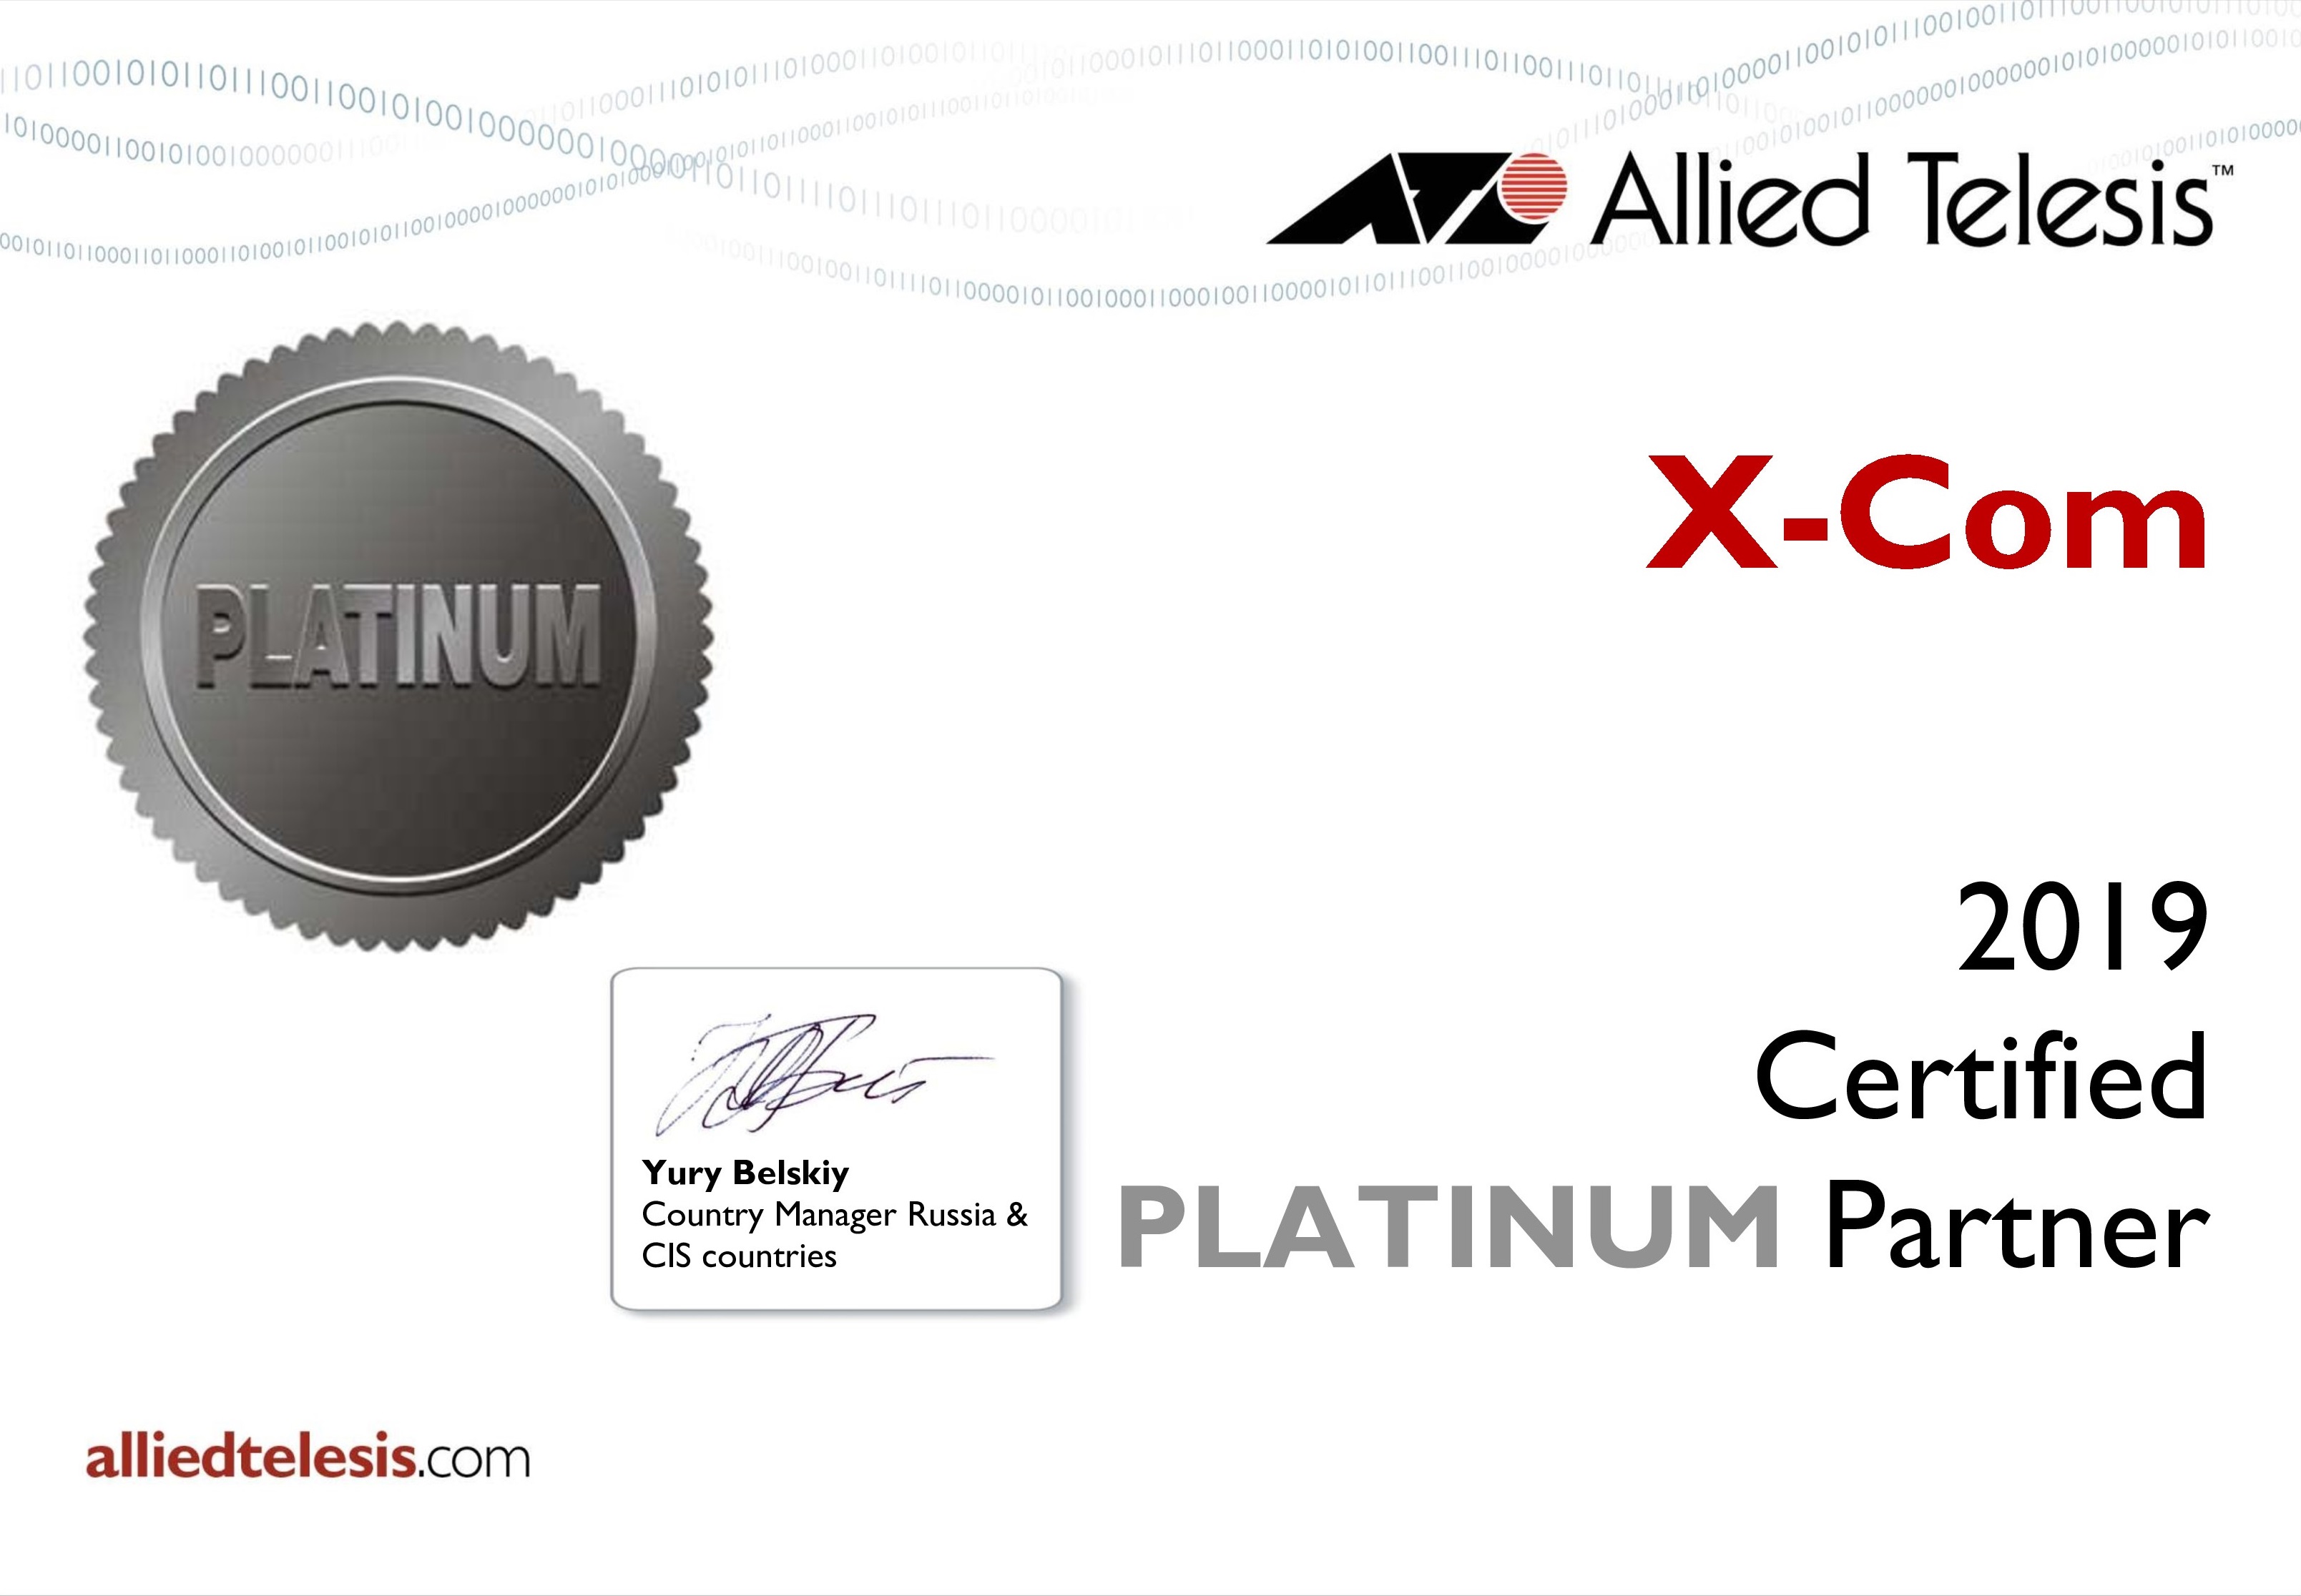 X-Com – Платиновый партнер Allied Telesis